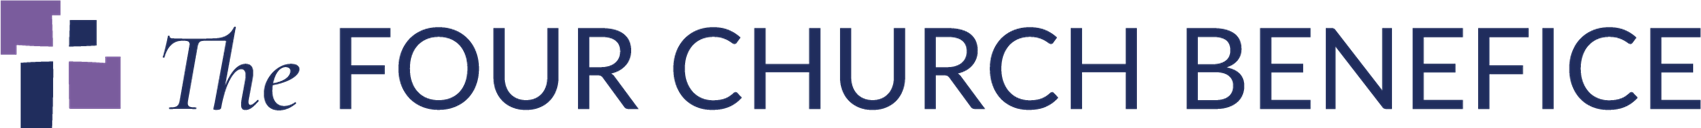 The Four Church Benefice Logo